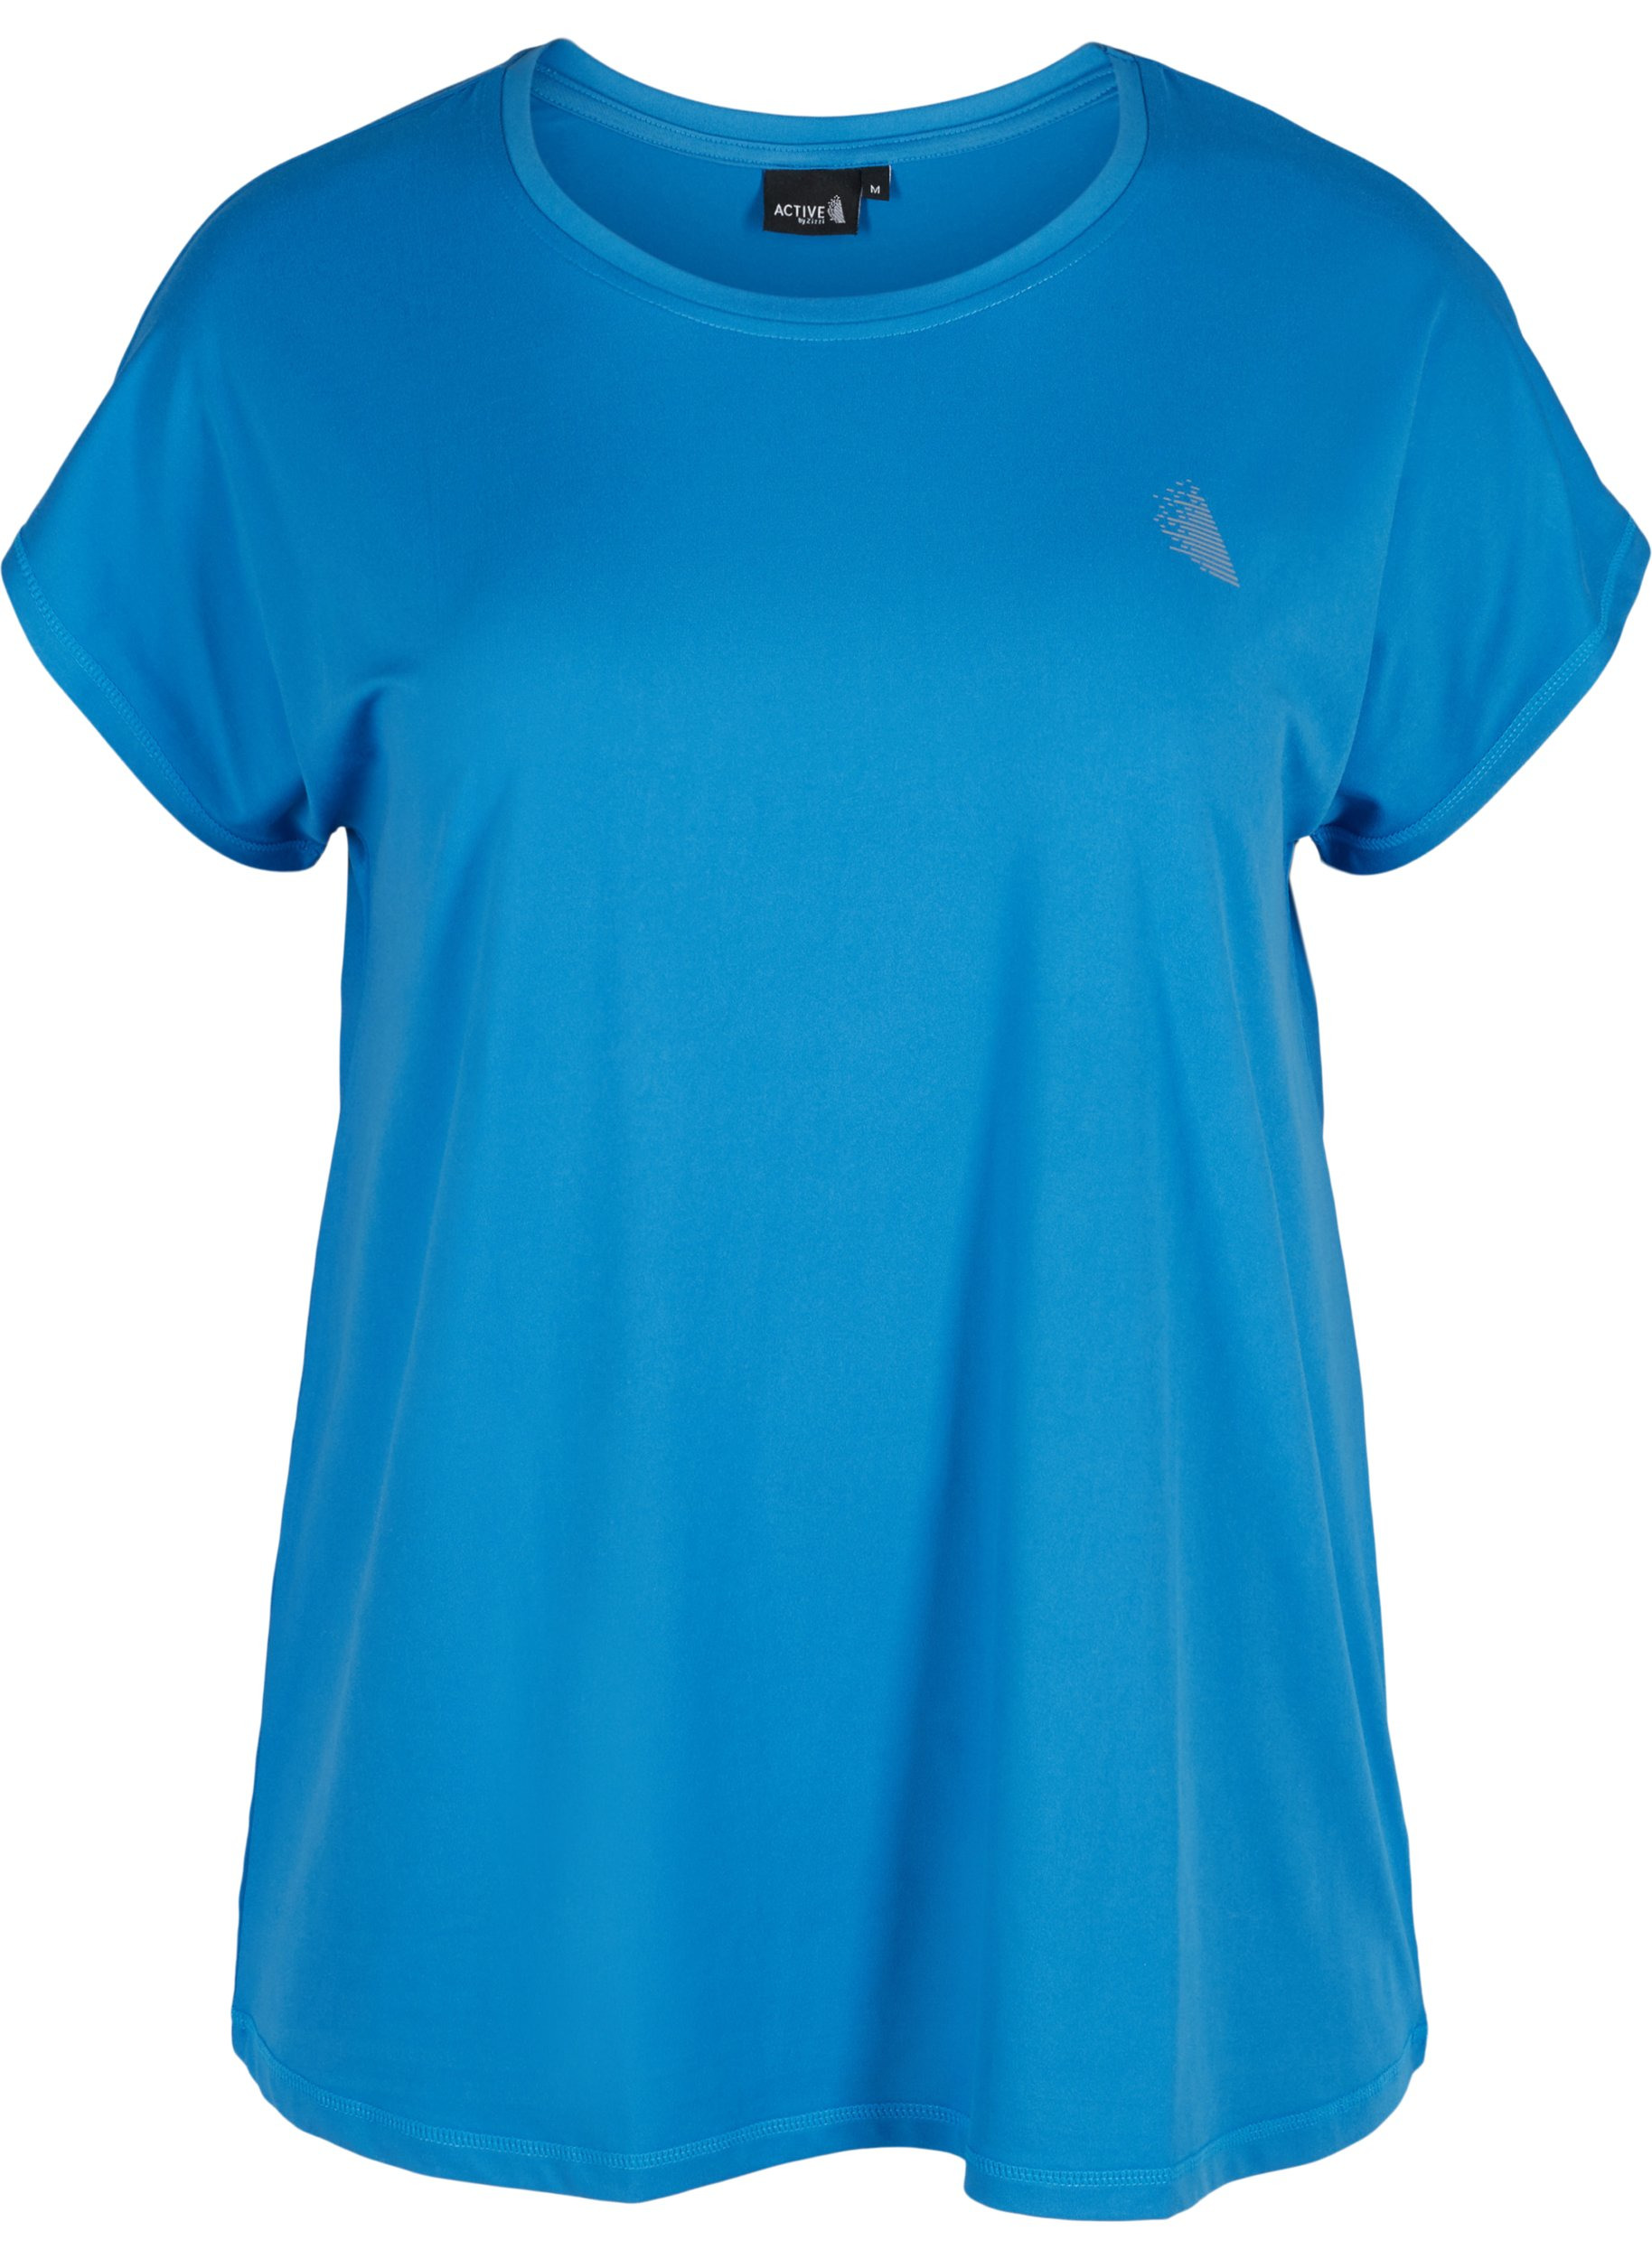 Einfarbiges Trainings-T-Shirt, Daphne Blue